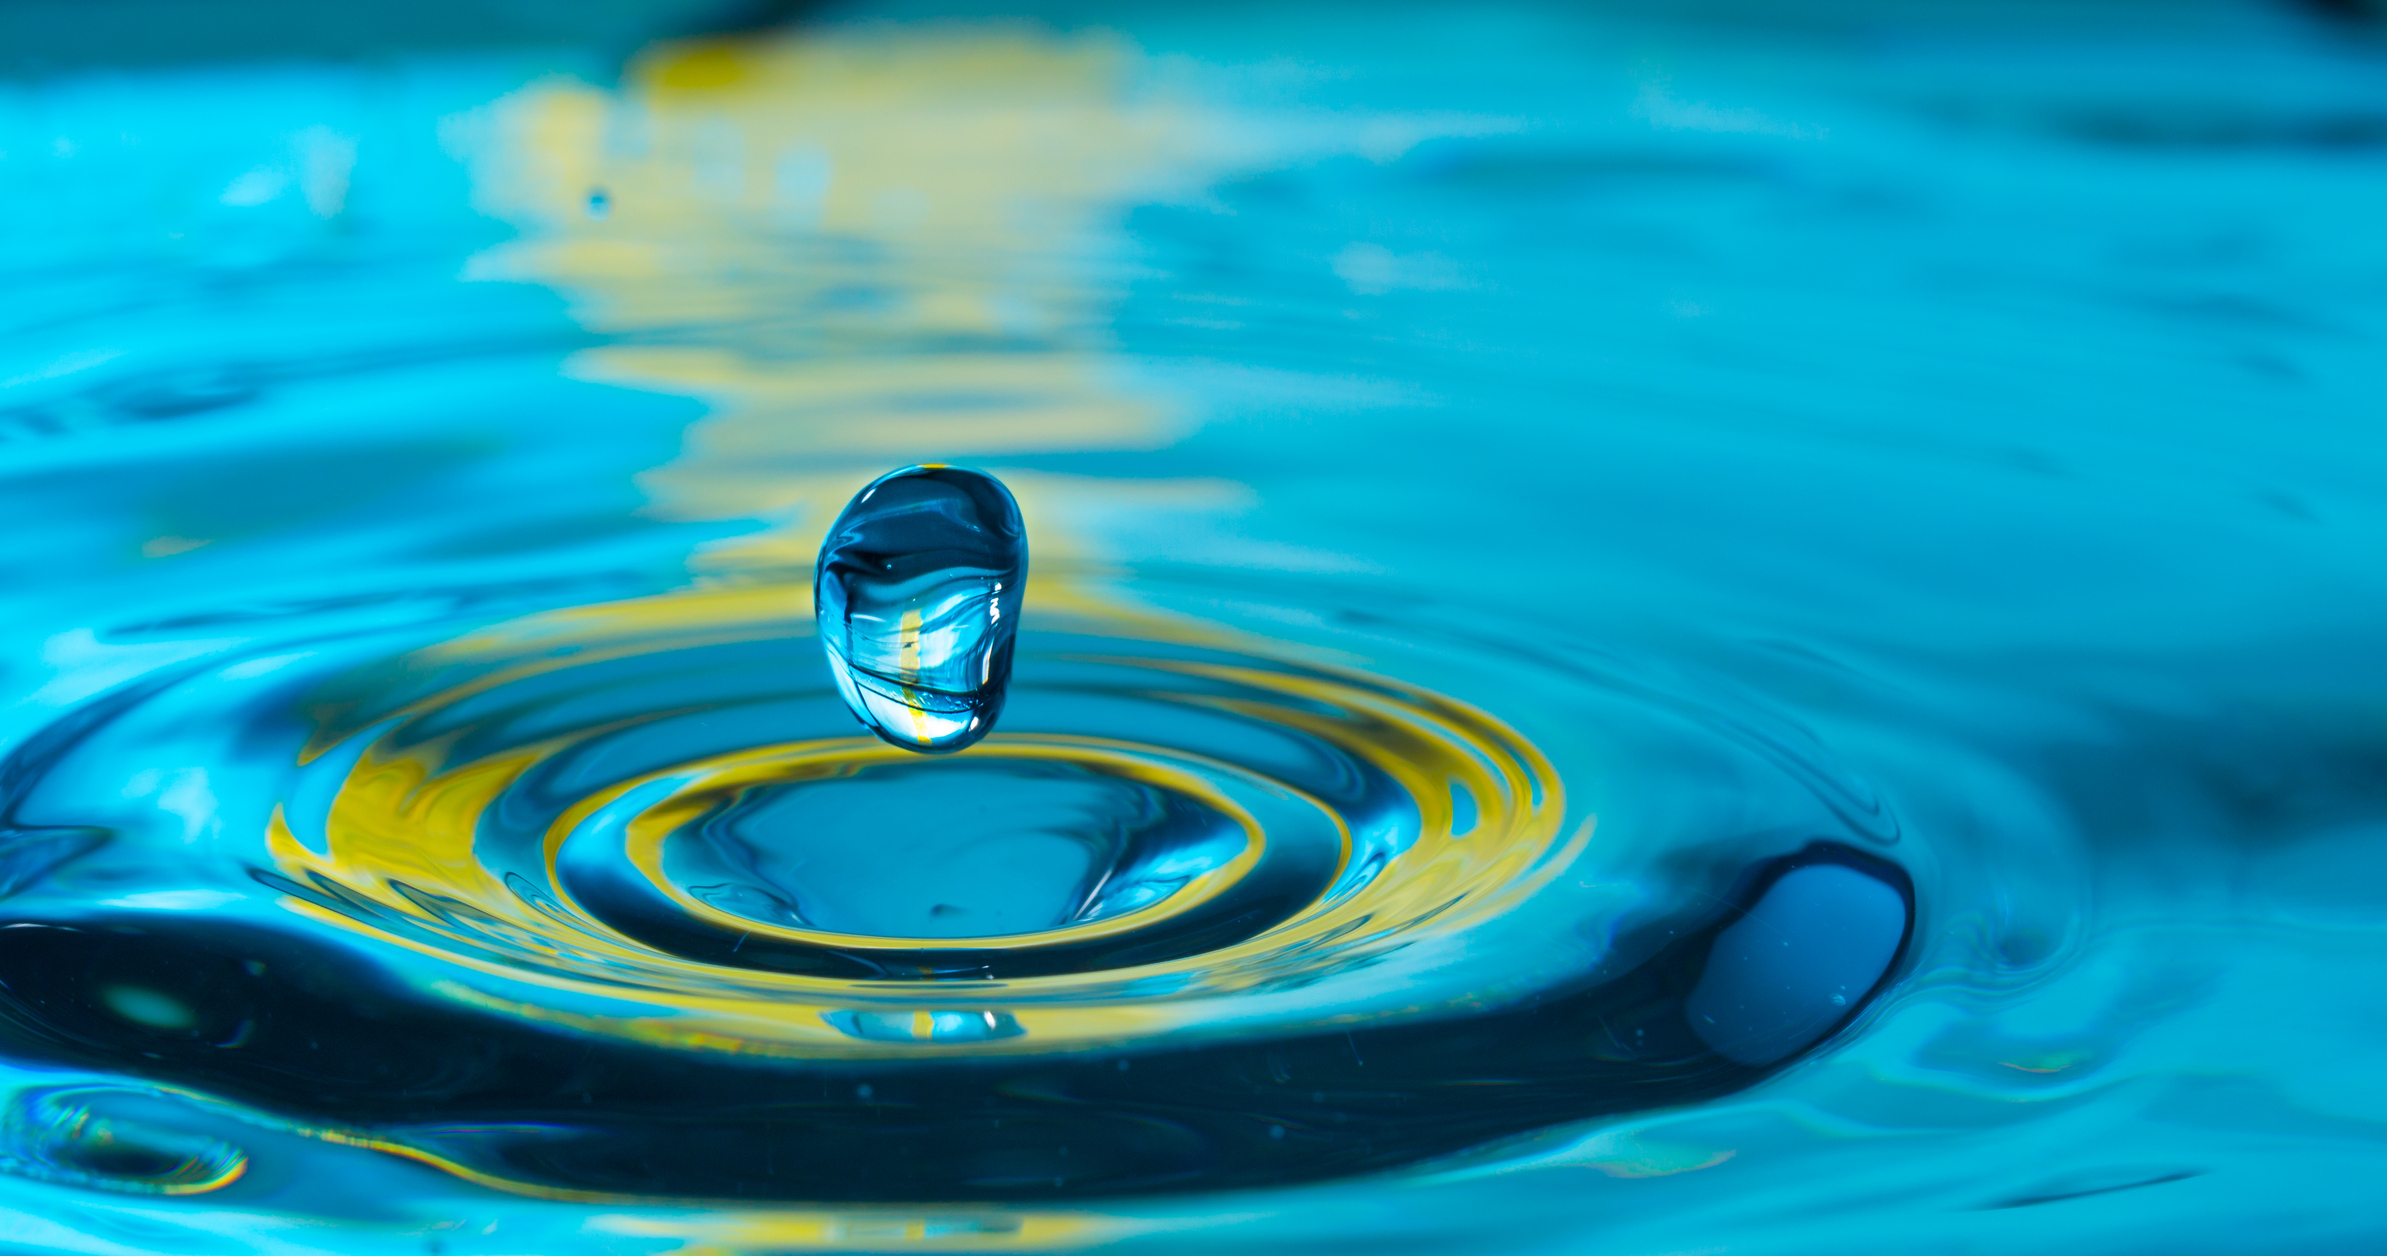 water drop splash in a glass blue colored